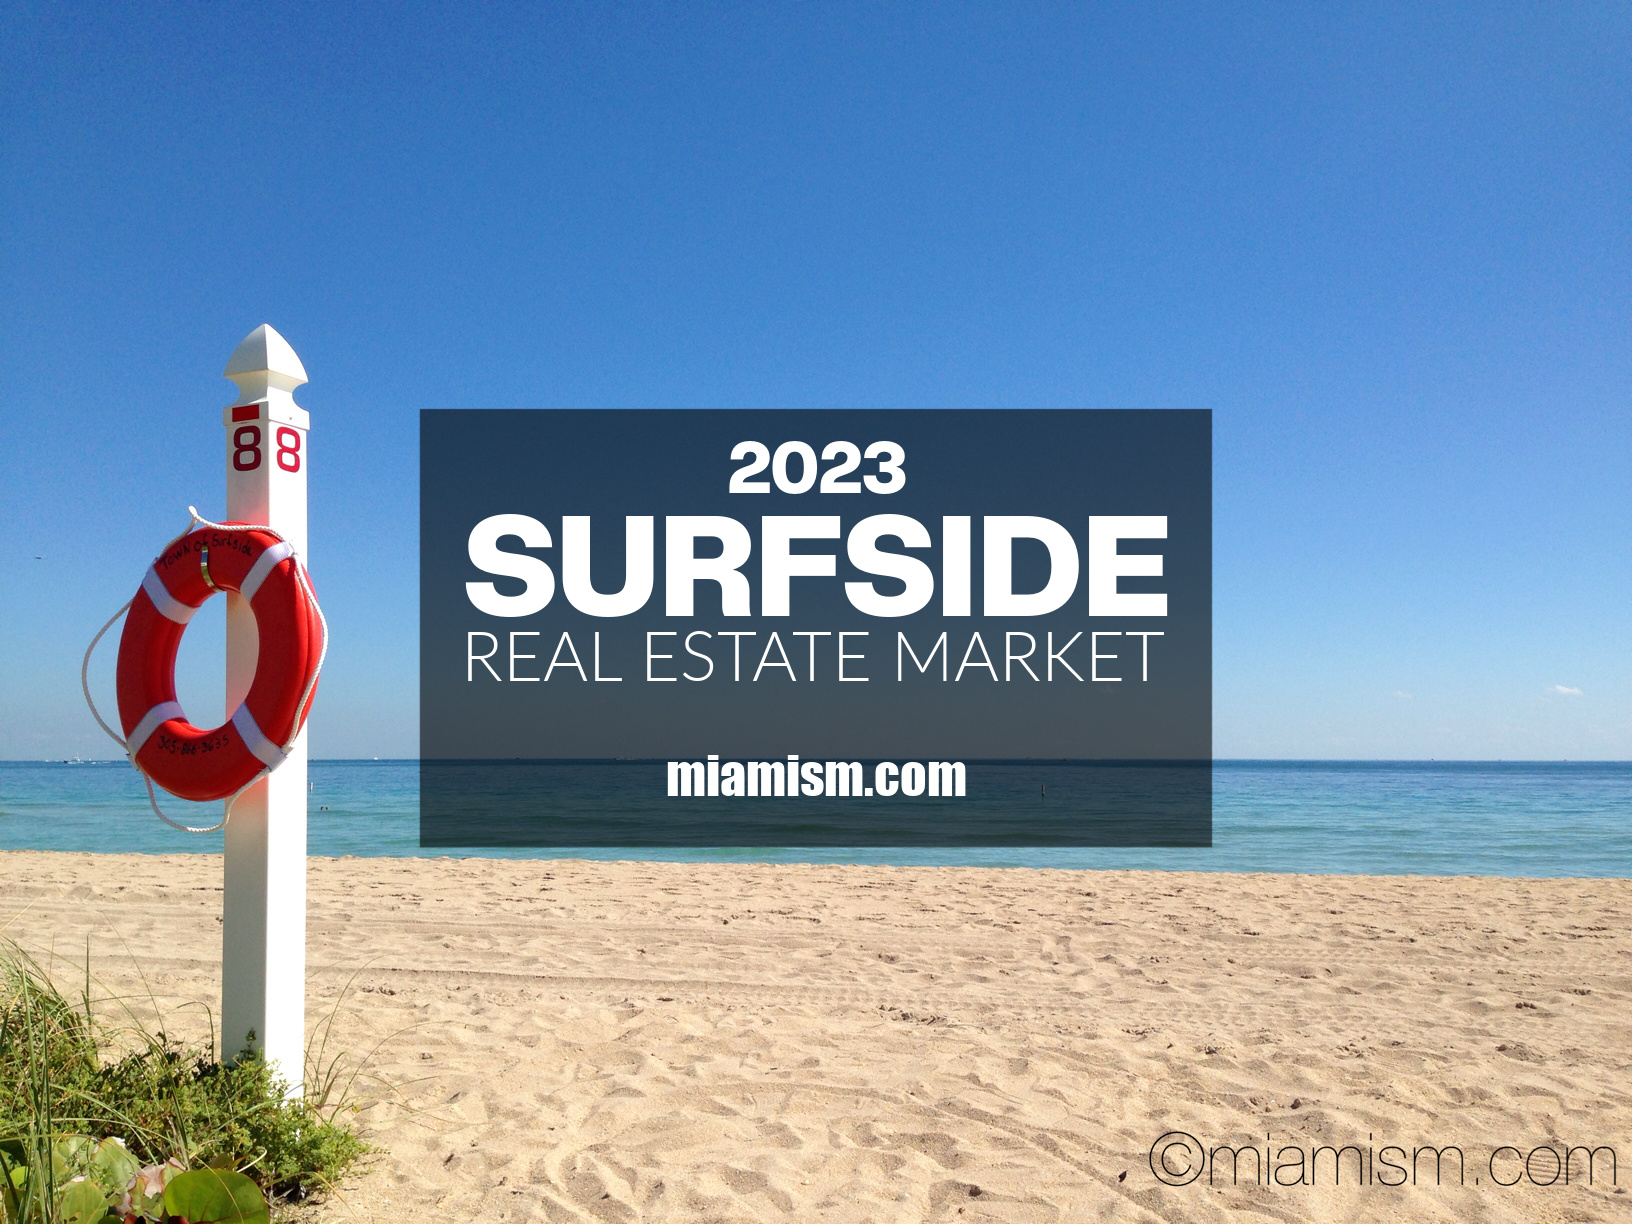 2023 Surfside Real Estate Market Report Summary